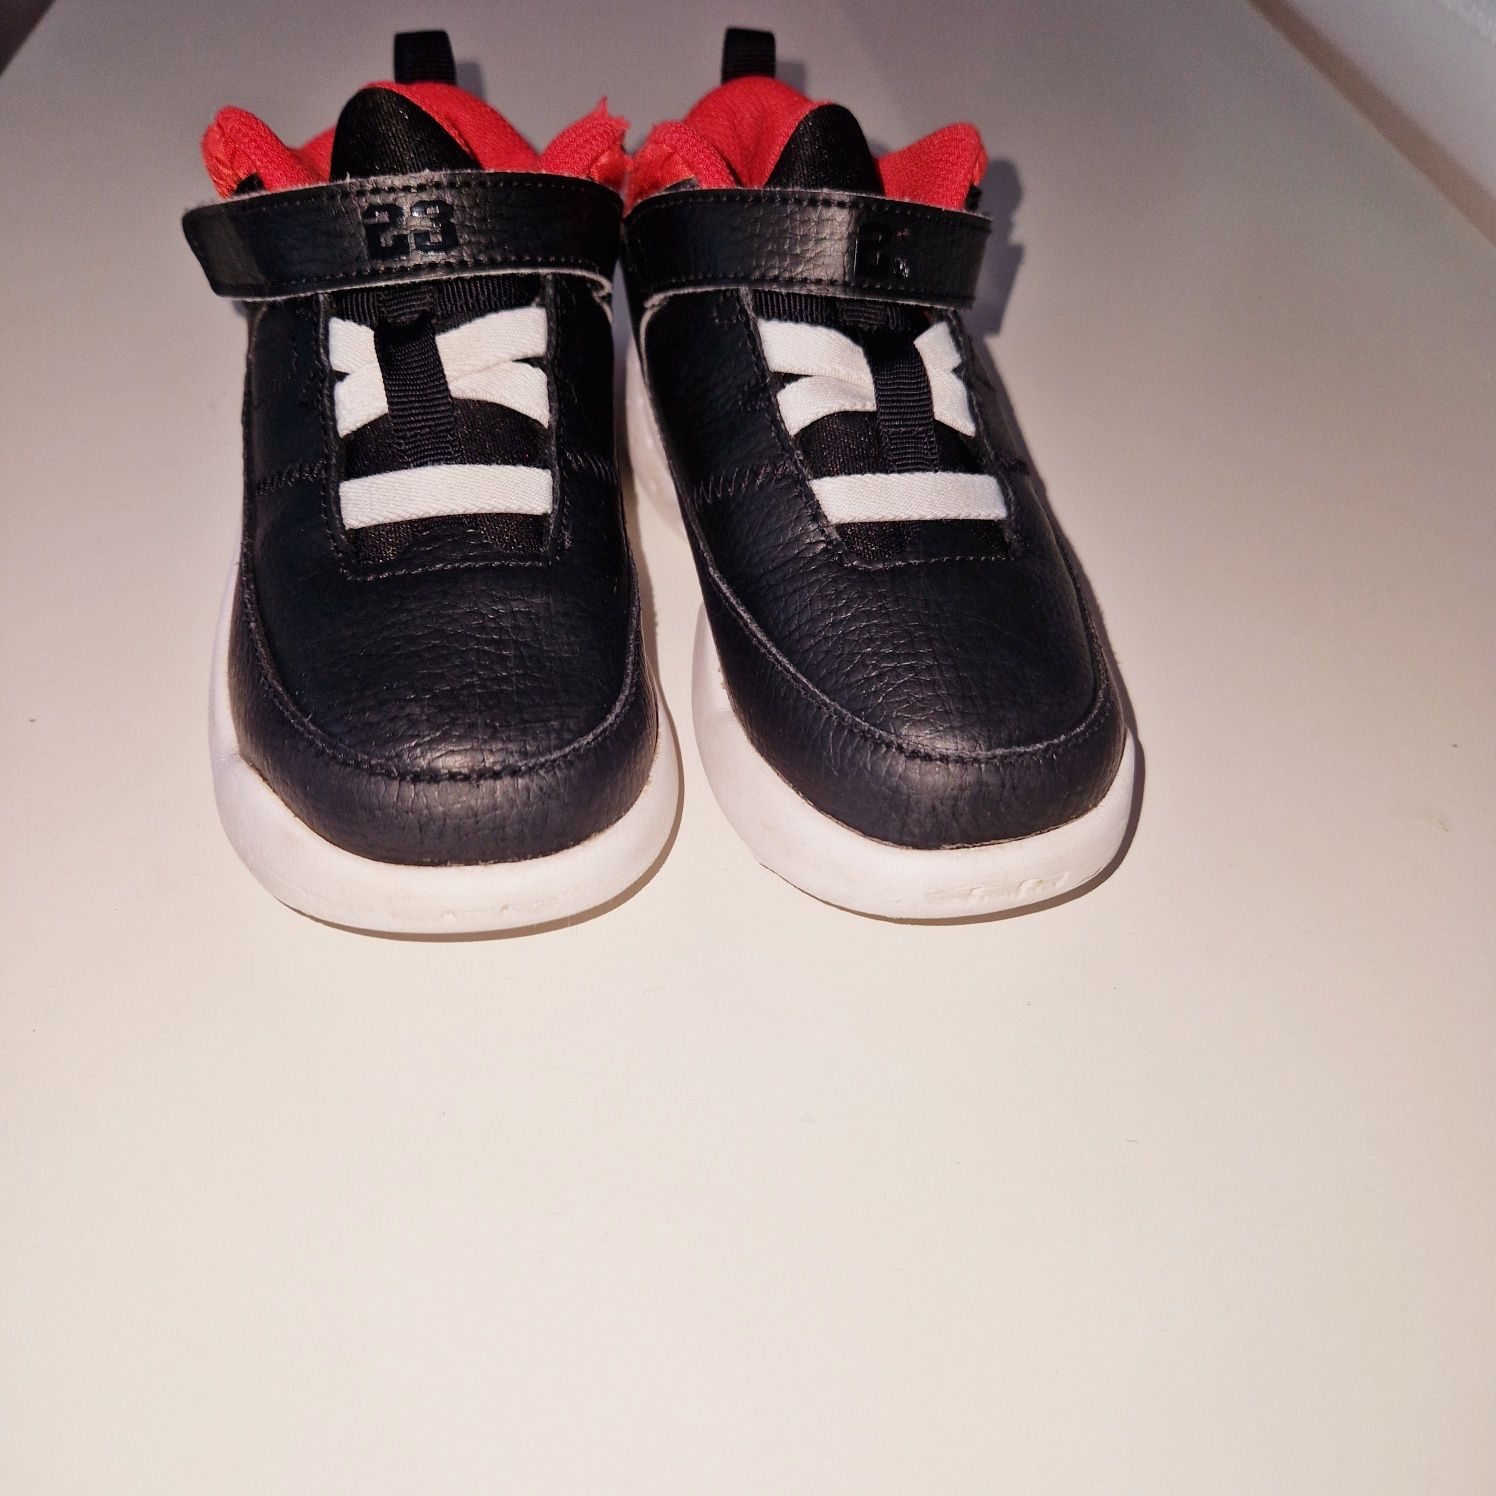 Adidasi Jordan copiii,numărul 27